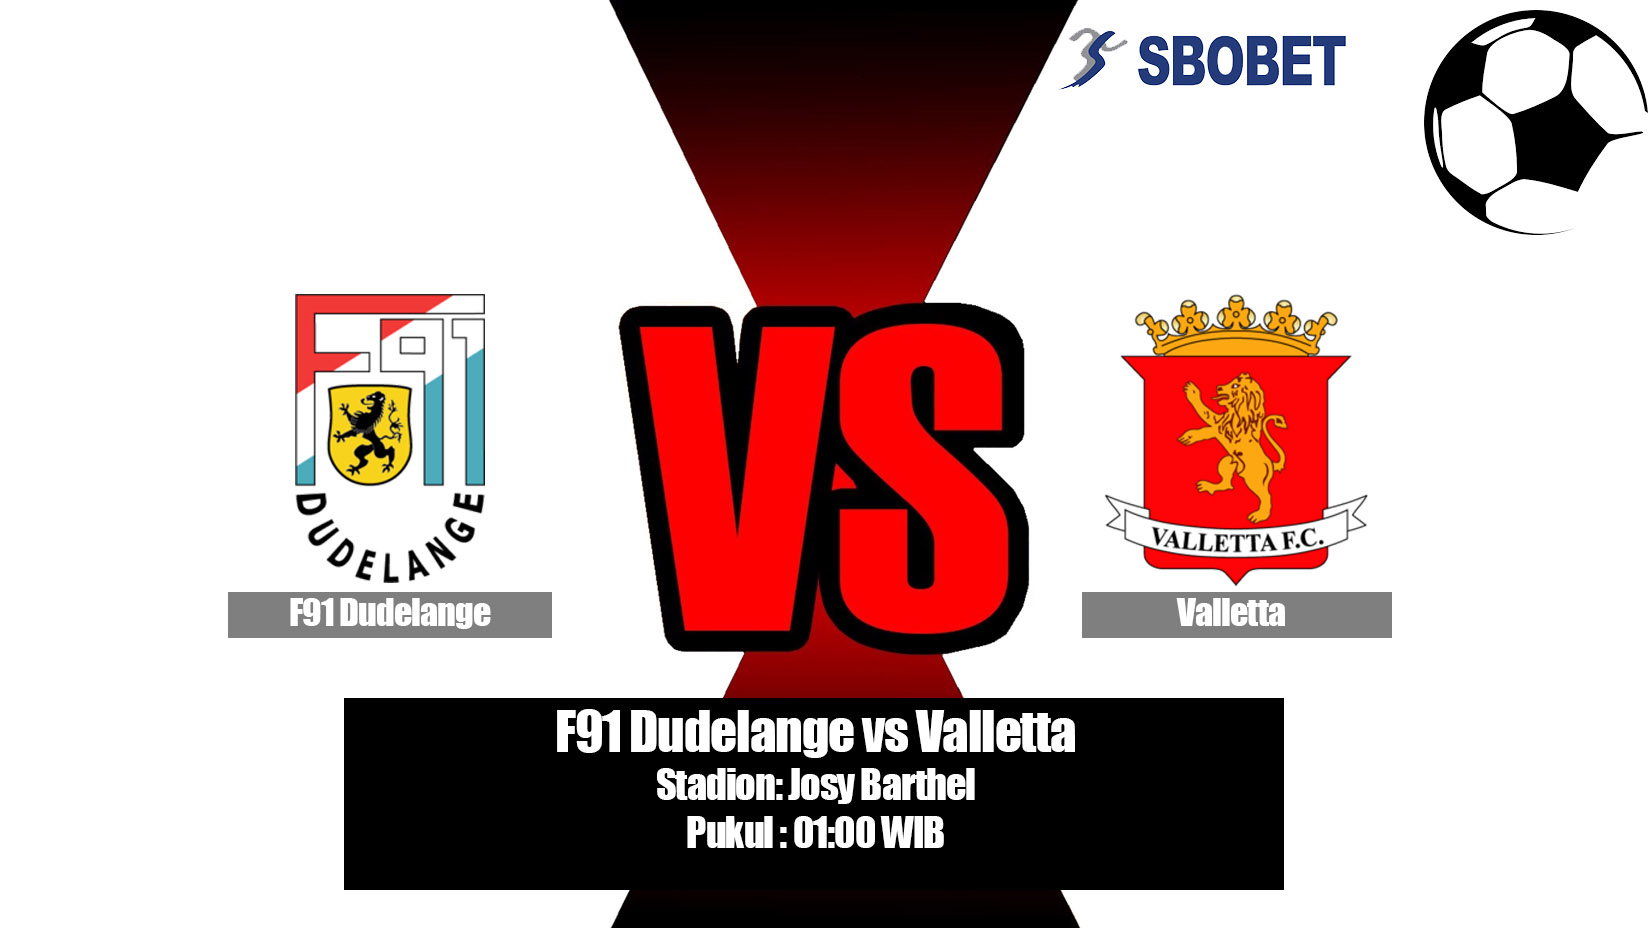 Prediksi Bola F91 Dudelange vs Valletta 10 Juli 2019